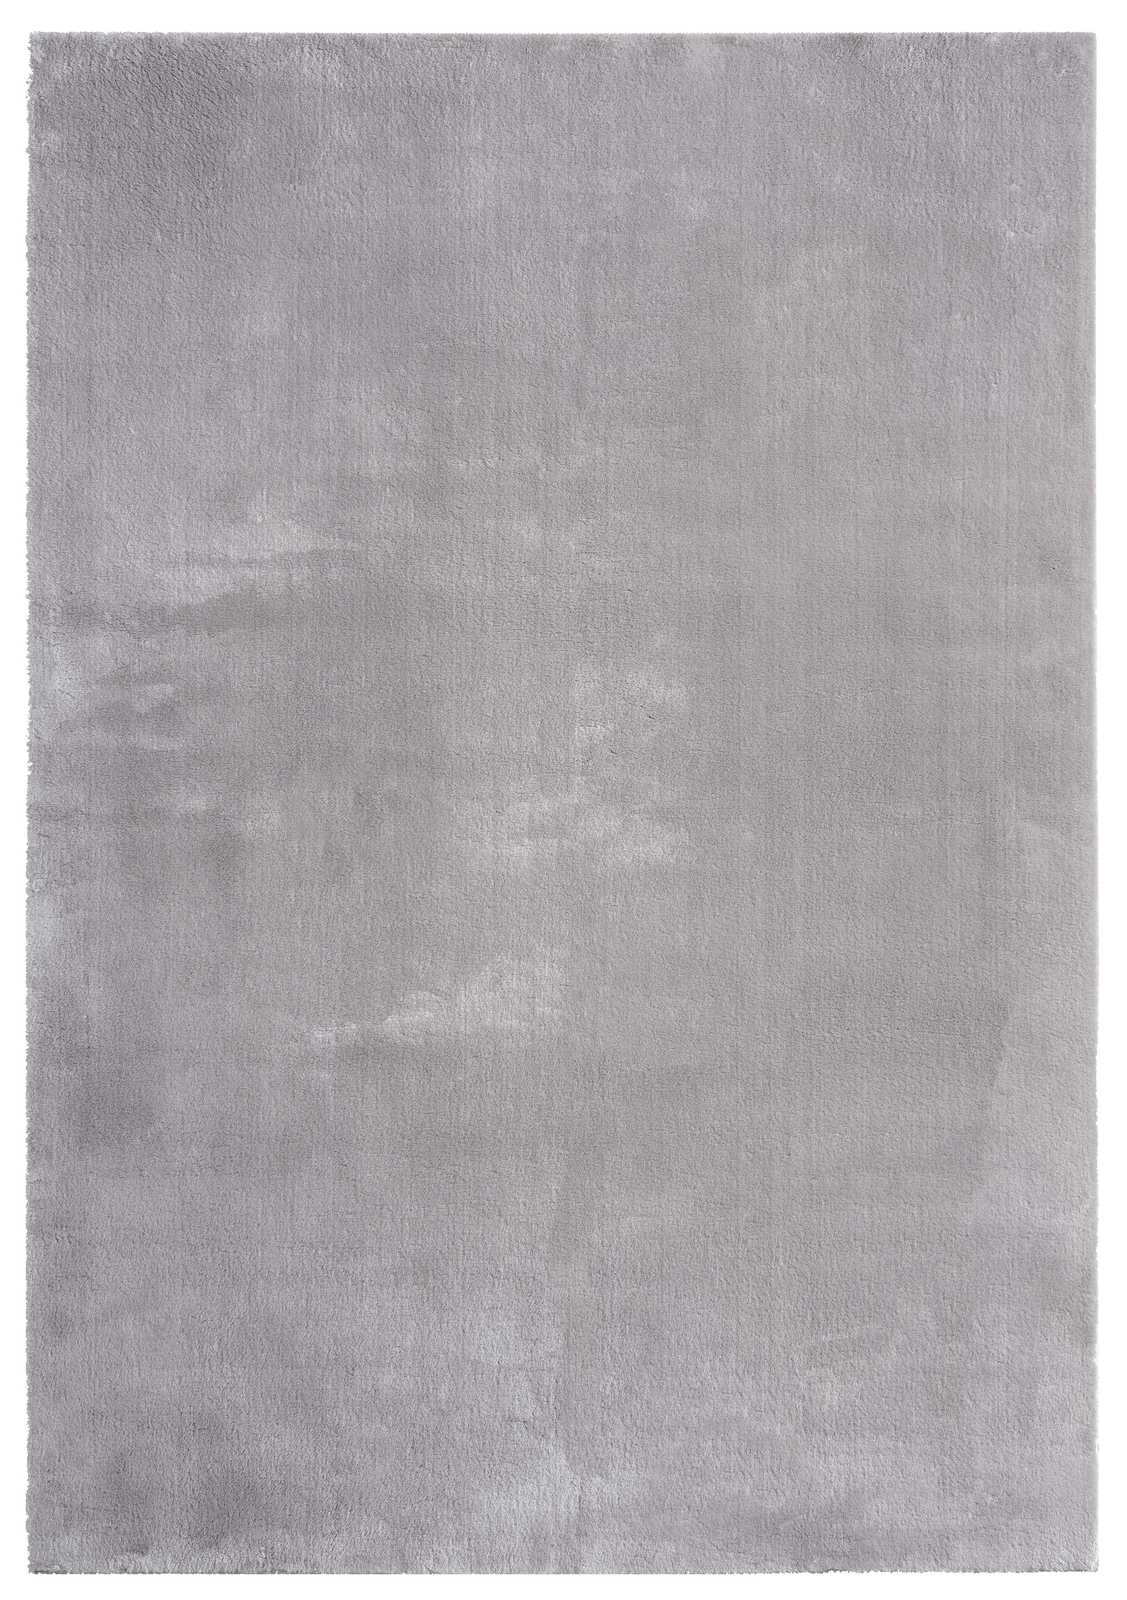             Feiner Hochflor Teppich in Grau – 170 x 120 cm
        